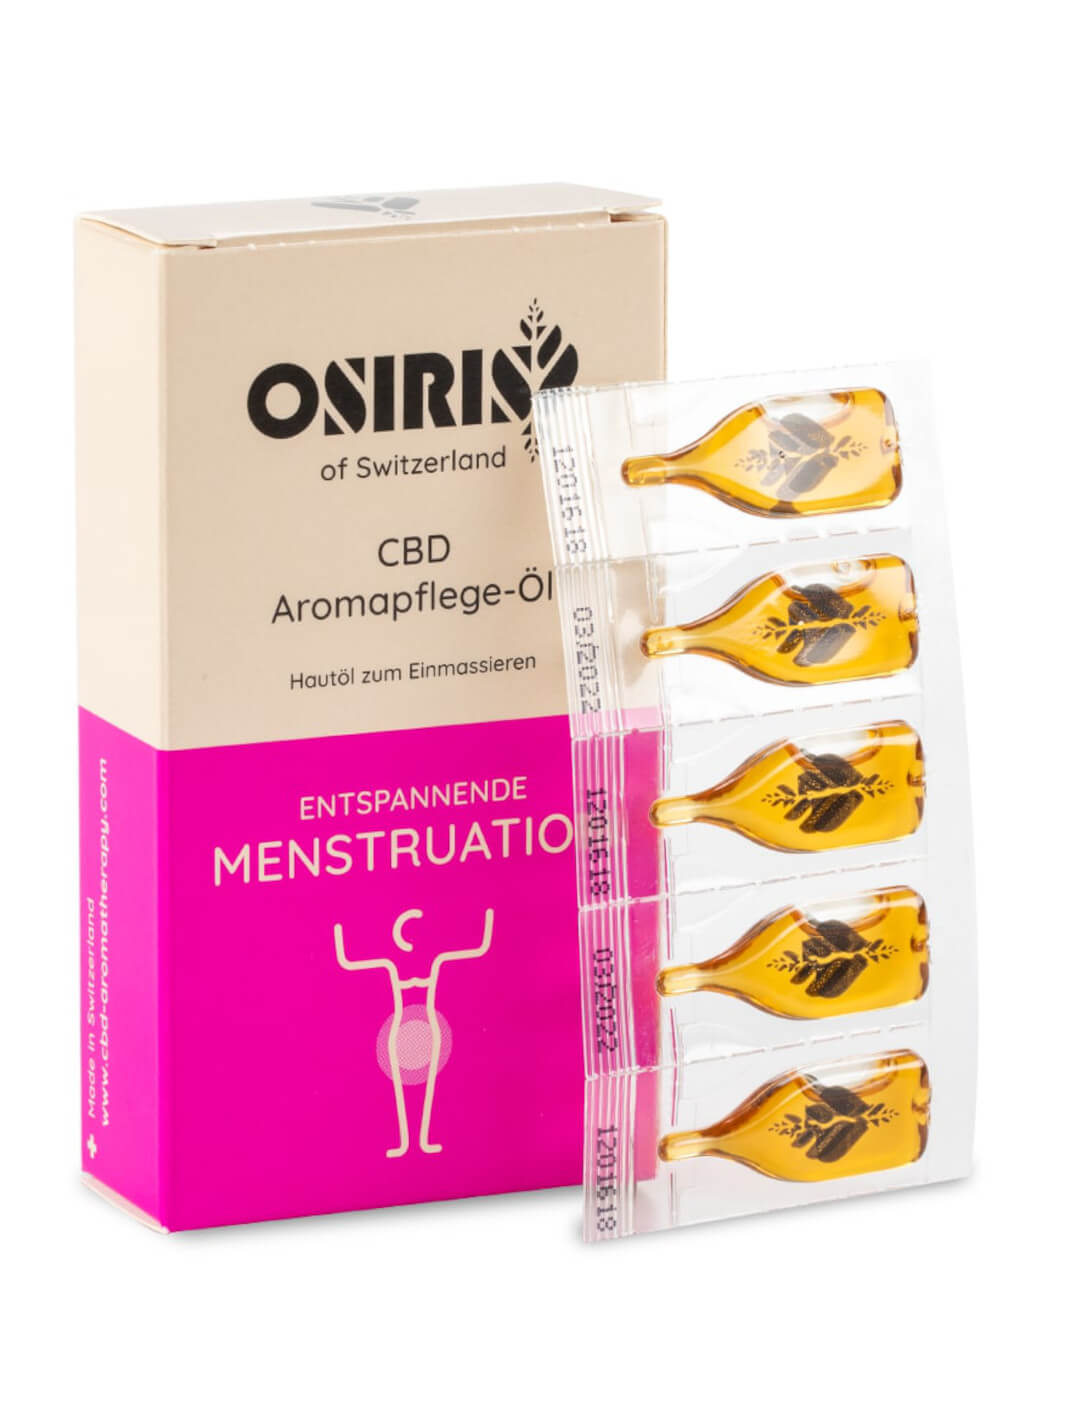 CBD aroma care oil relaxed menstruation